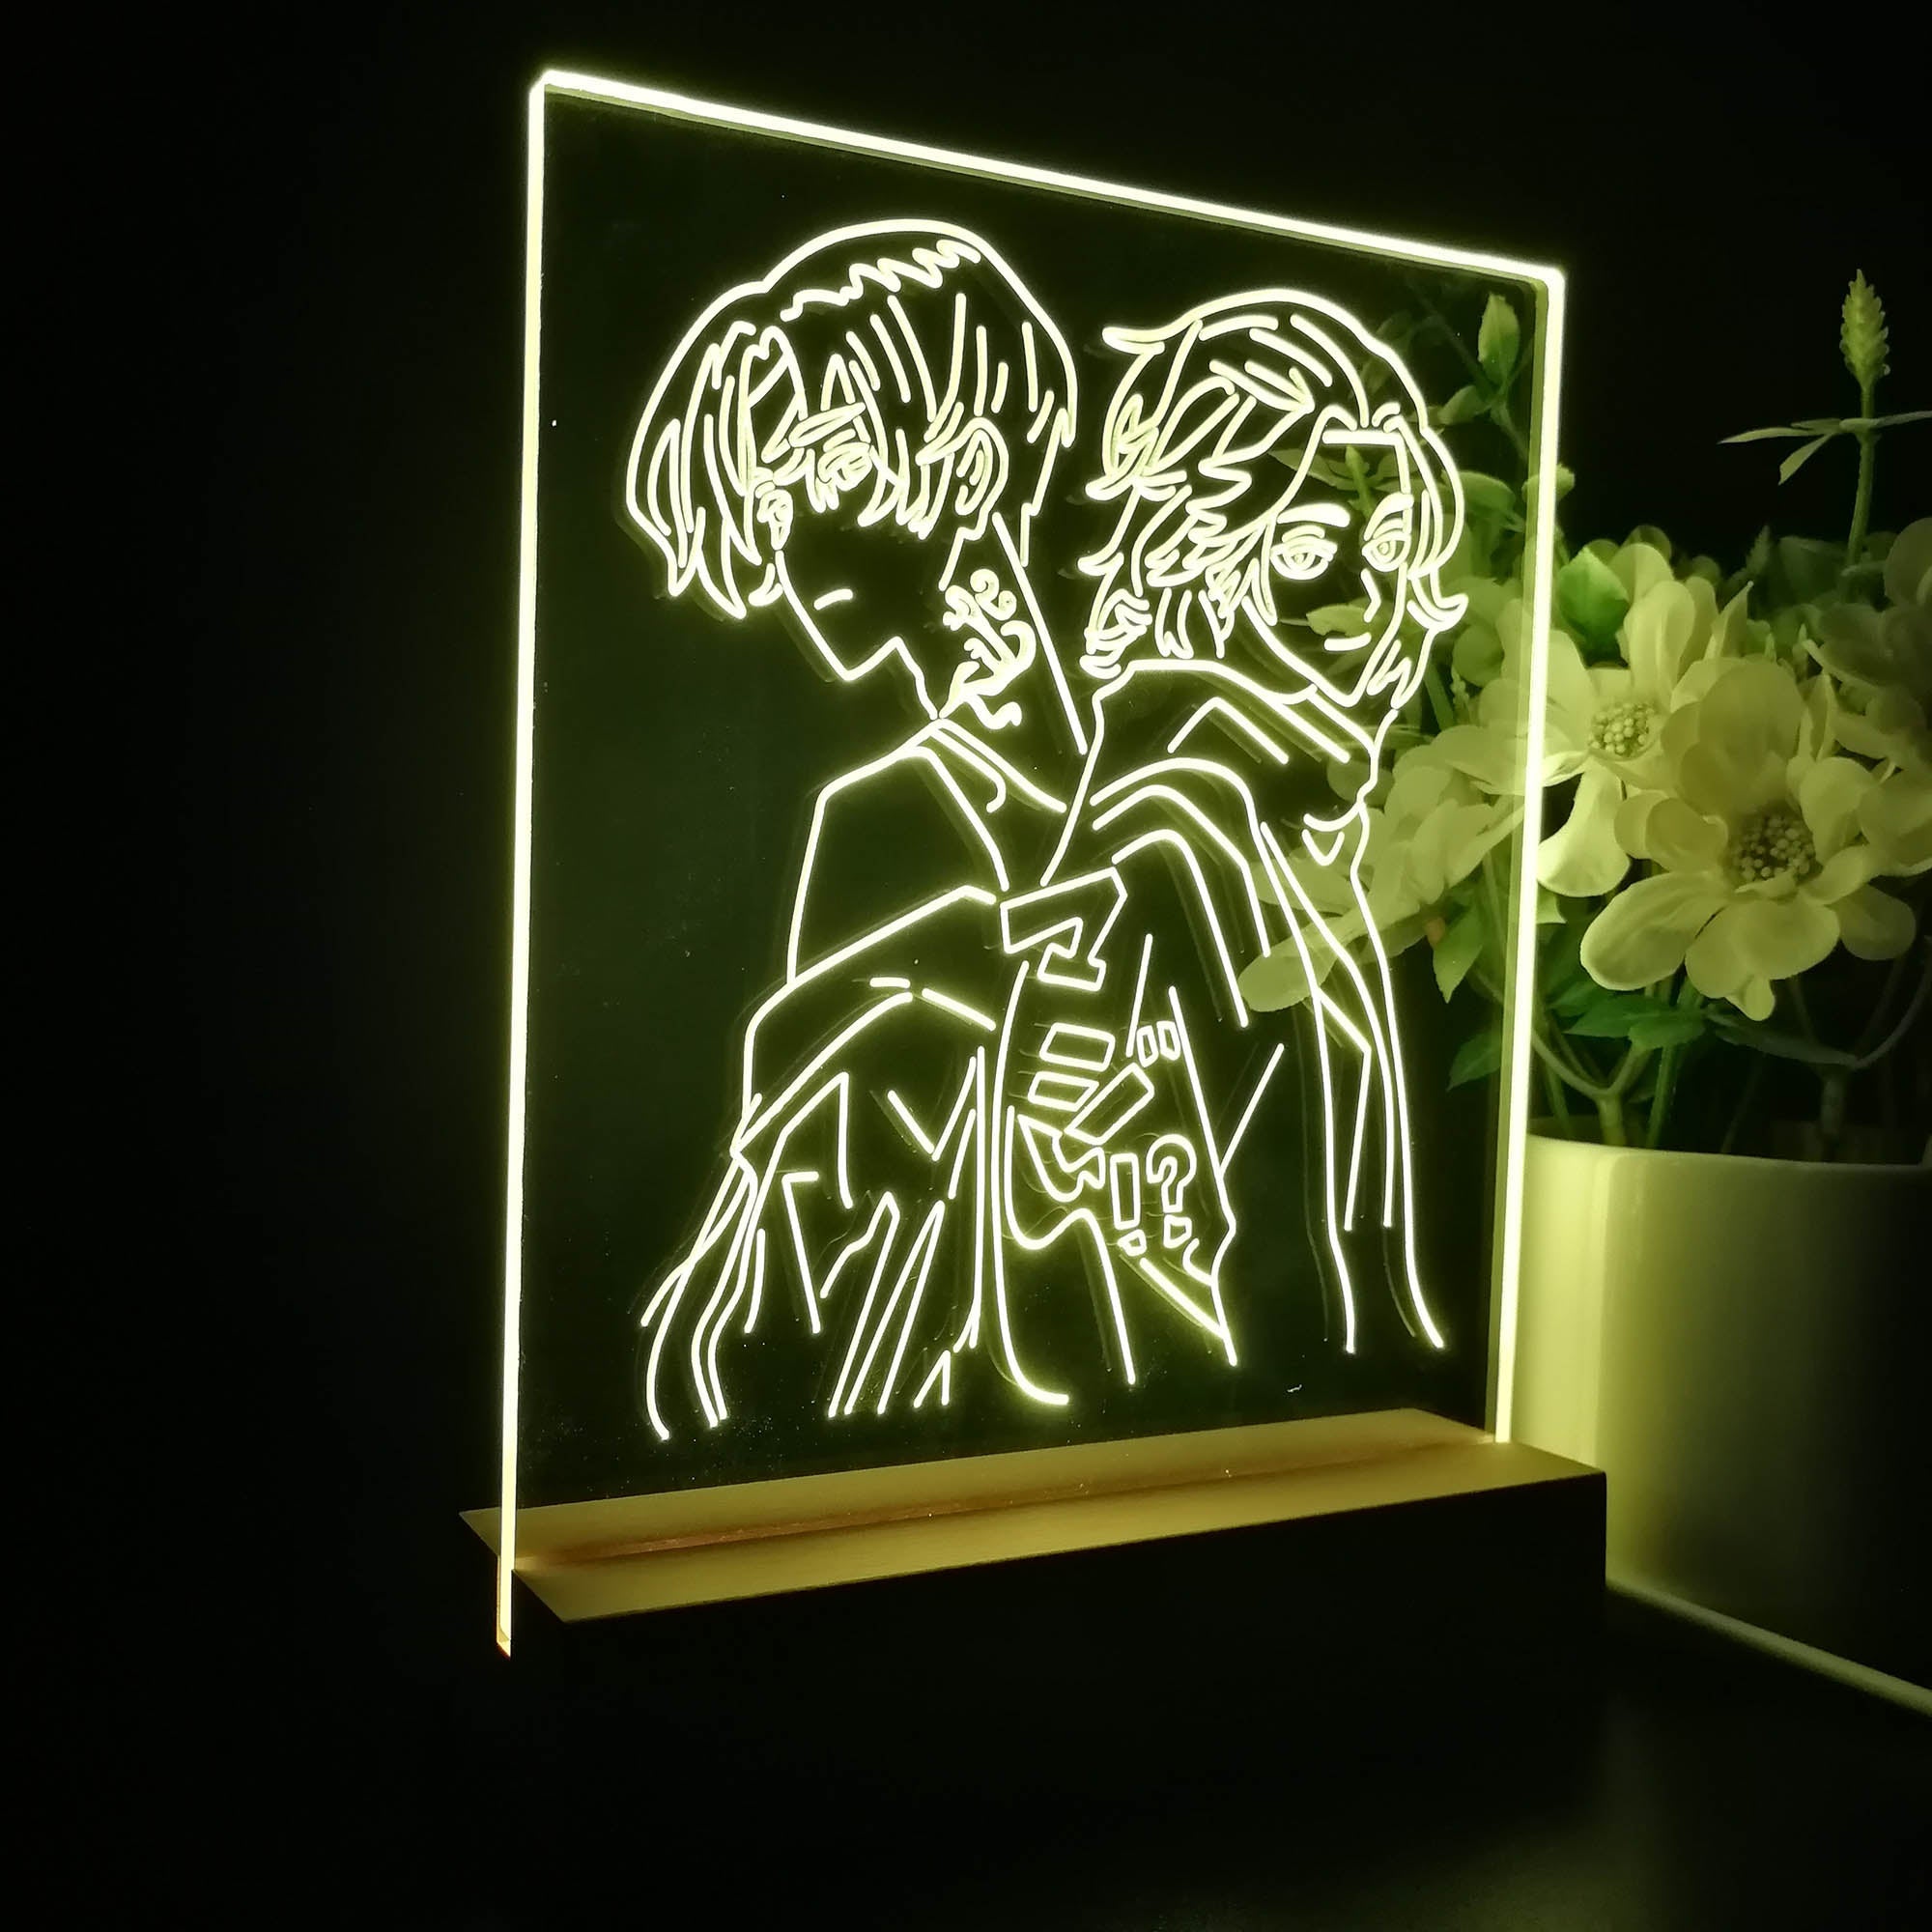 Tokyo Revengers Game Room LED Sign Lamp Display